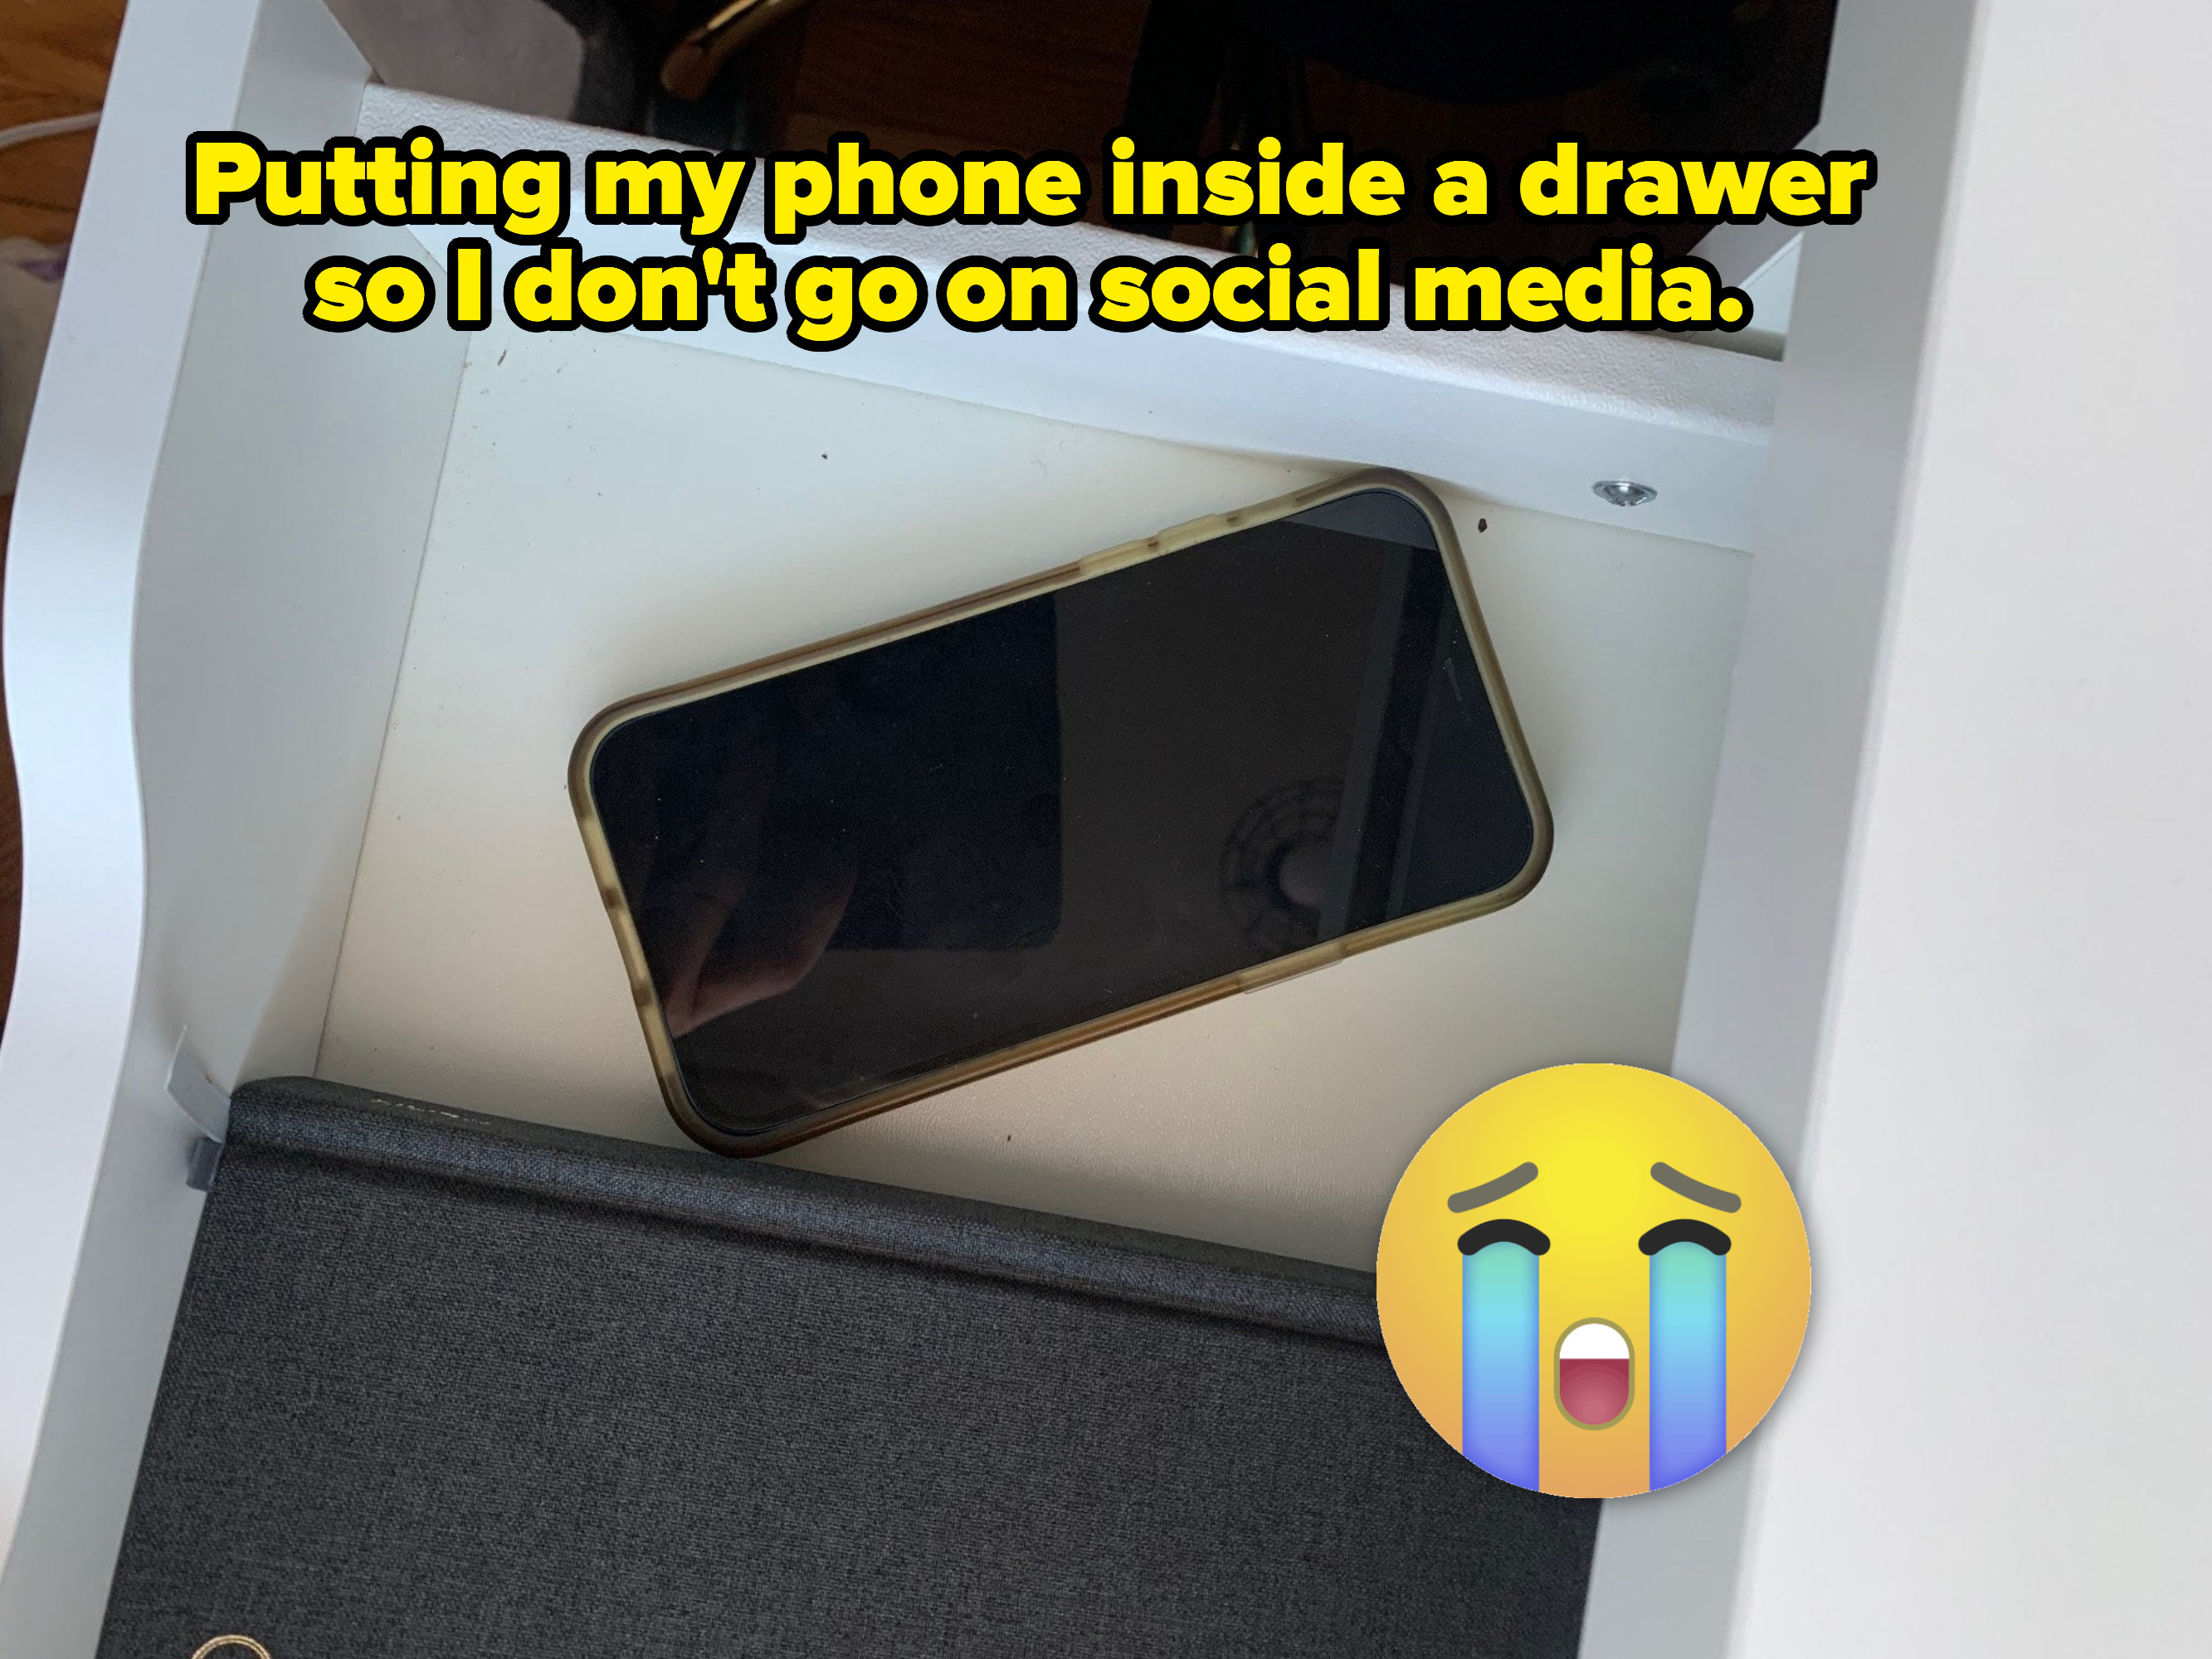 A phone inside a drawer